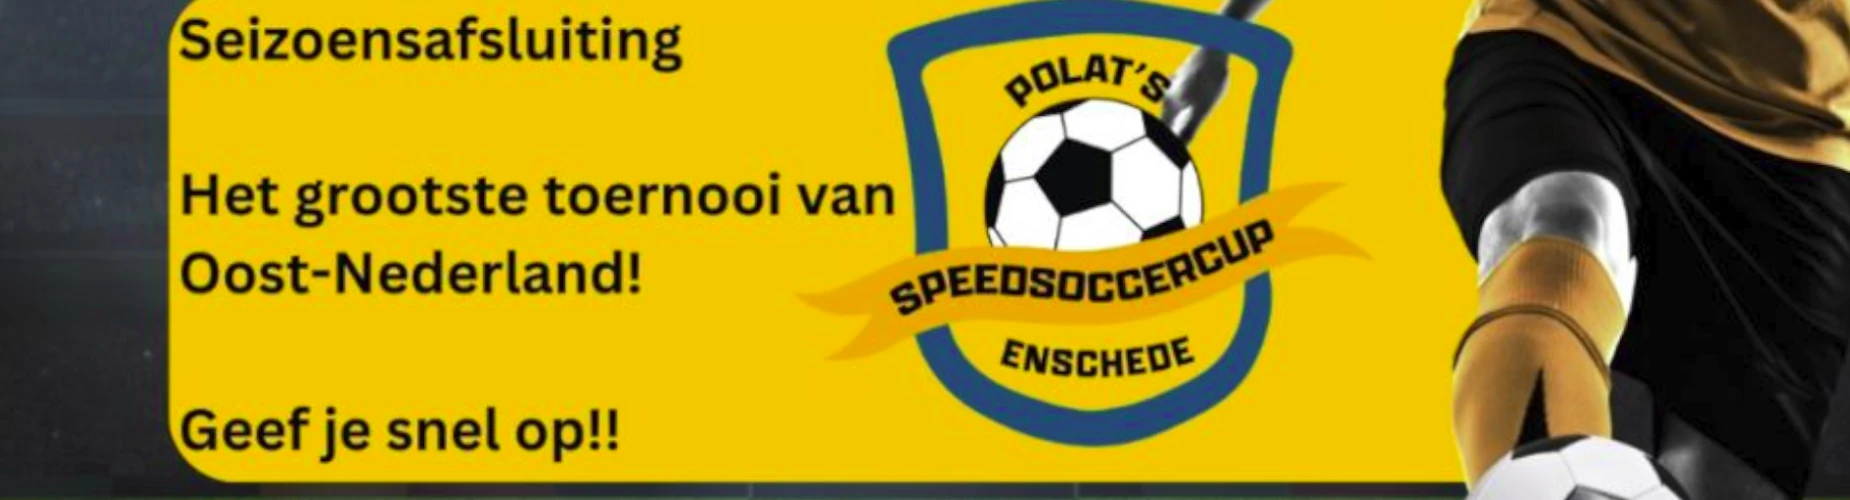 Banner - Polat’s Speedsoccercup - Sparta Enschede - Enschede